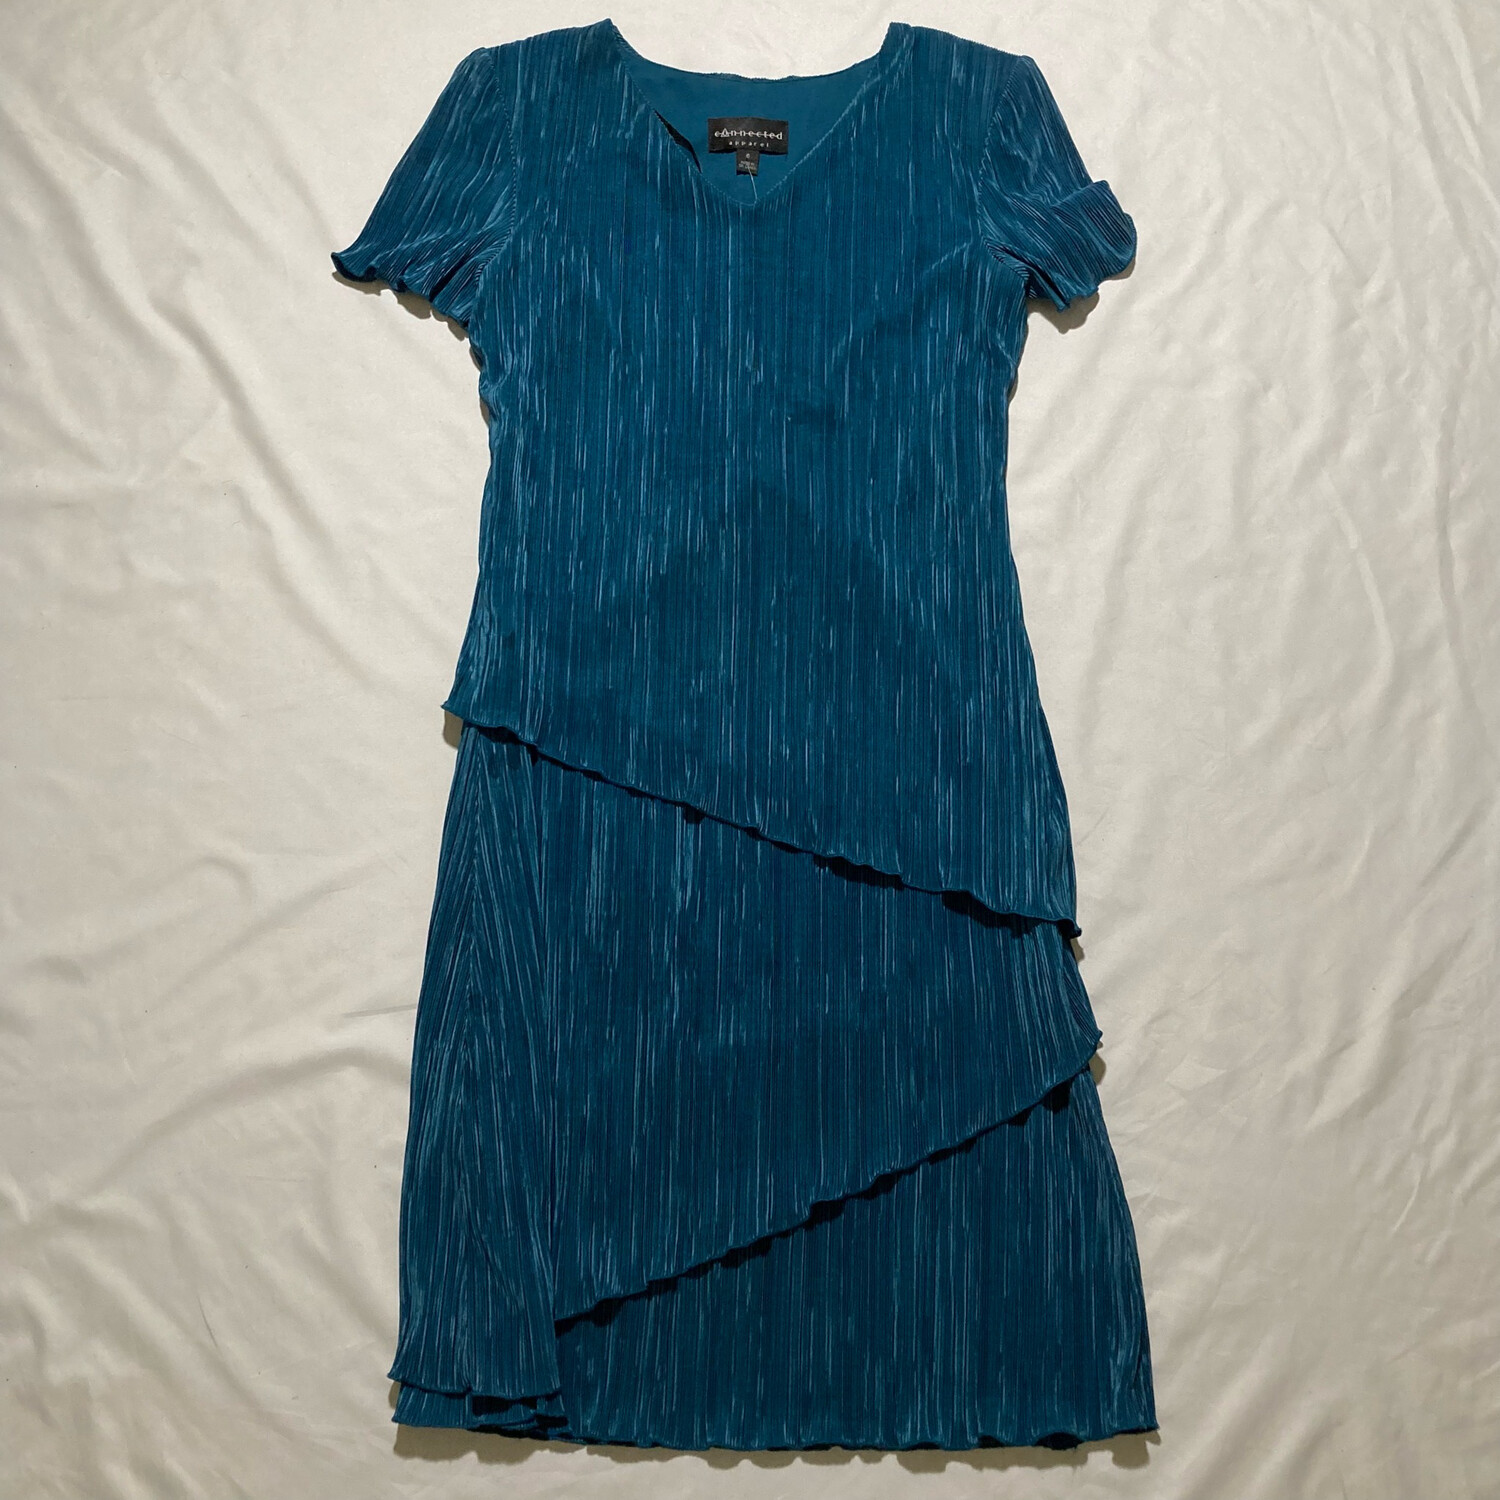 Connected Apparel Blue Vintage Dress